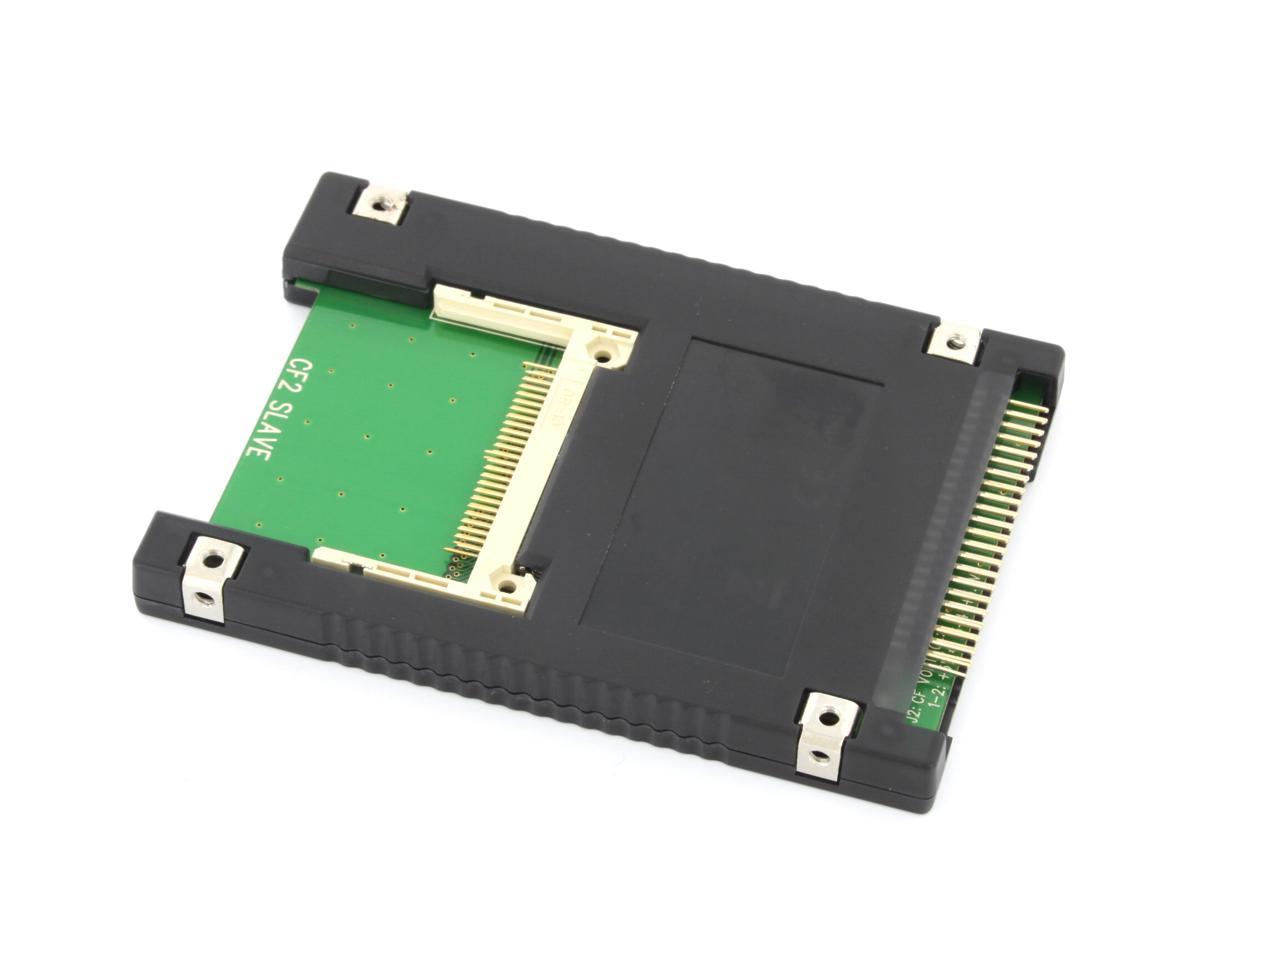 Syba SD-ADA45006 Dual Compact Flash to 44 Pin IDE 2.5" Adapter Enclosure Black 